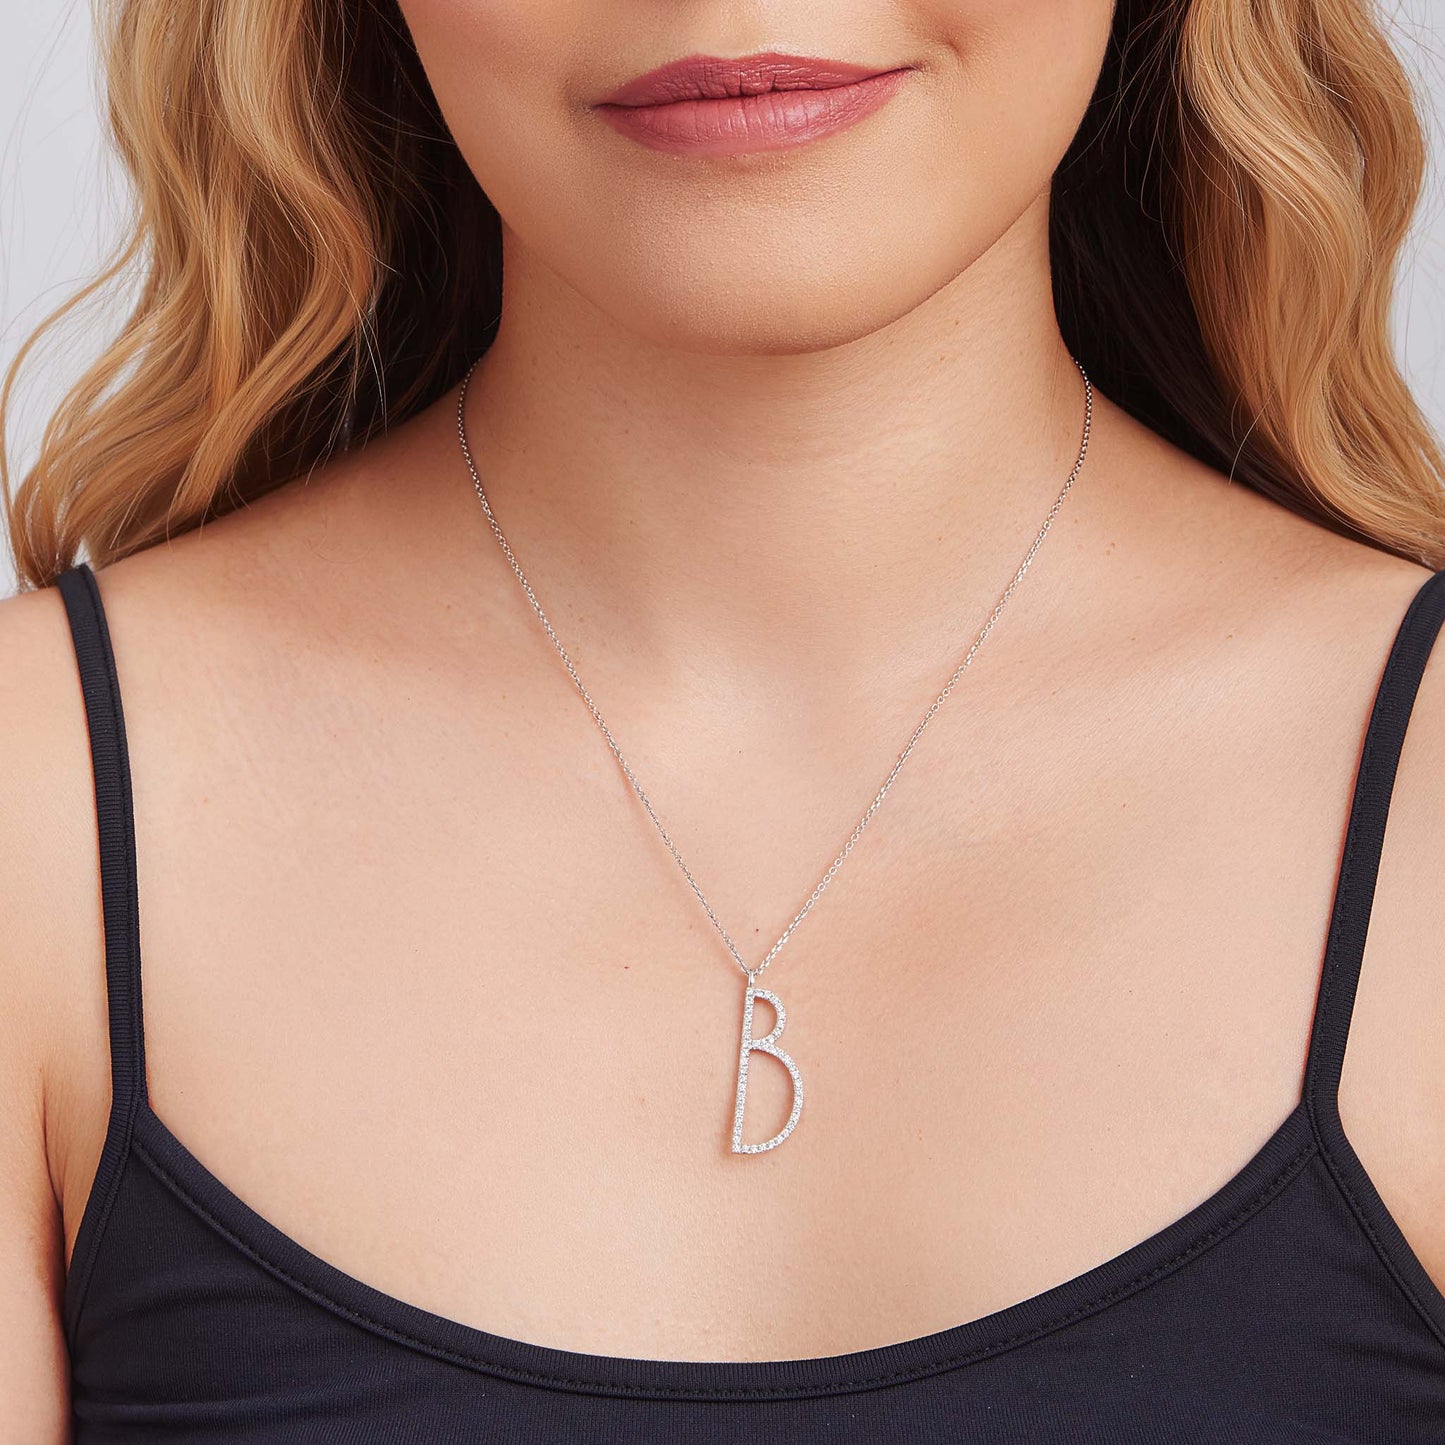 Type Letter B Diamond Pendant Necklace - Mimi So